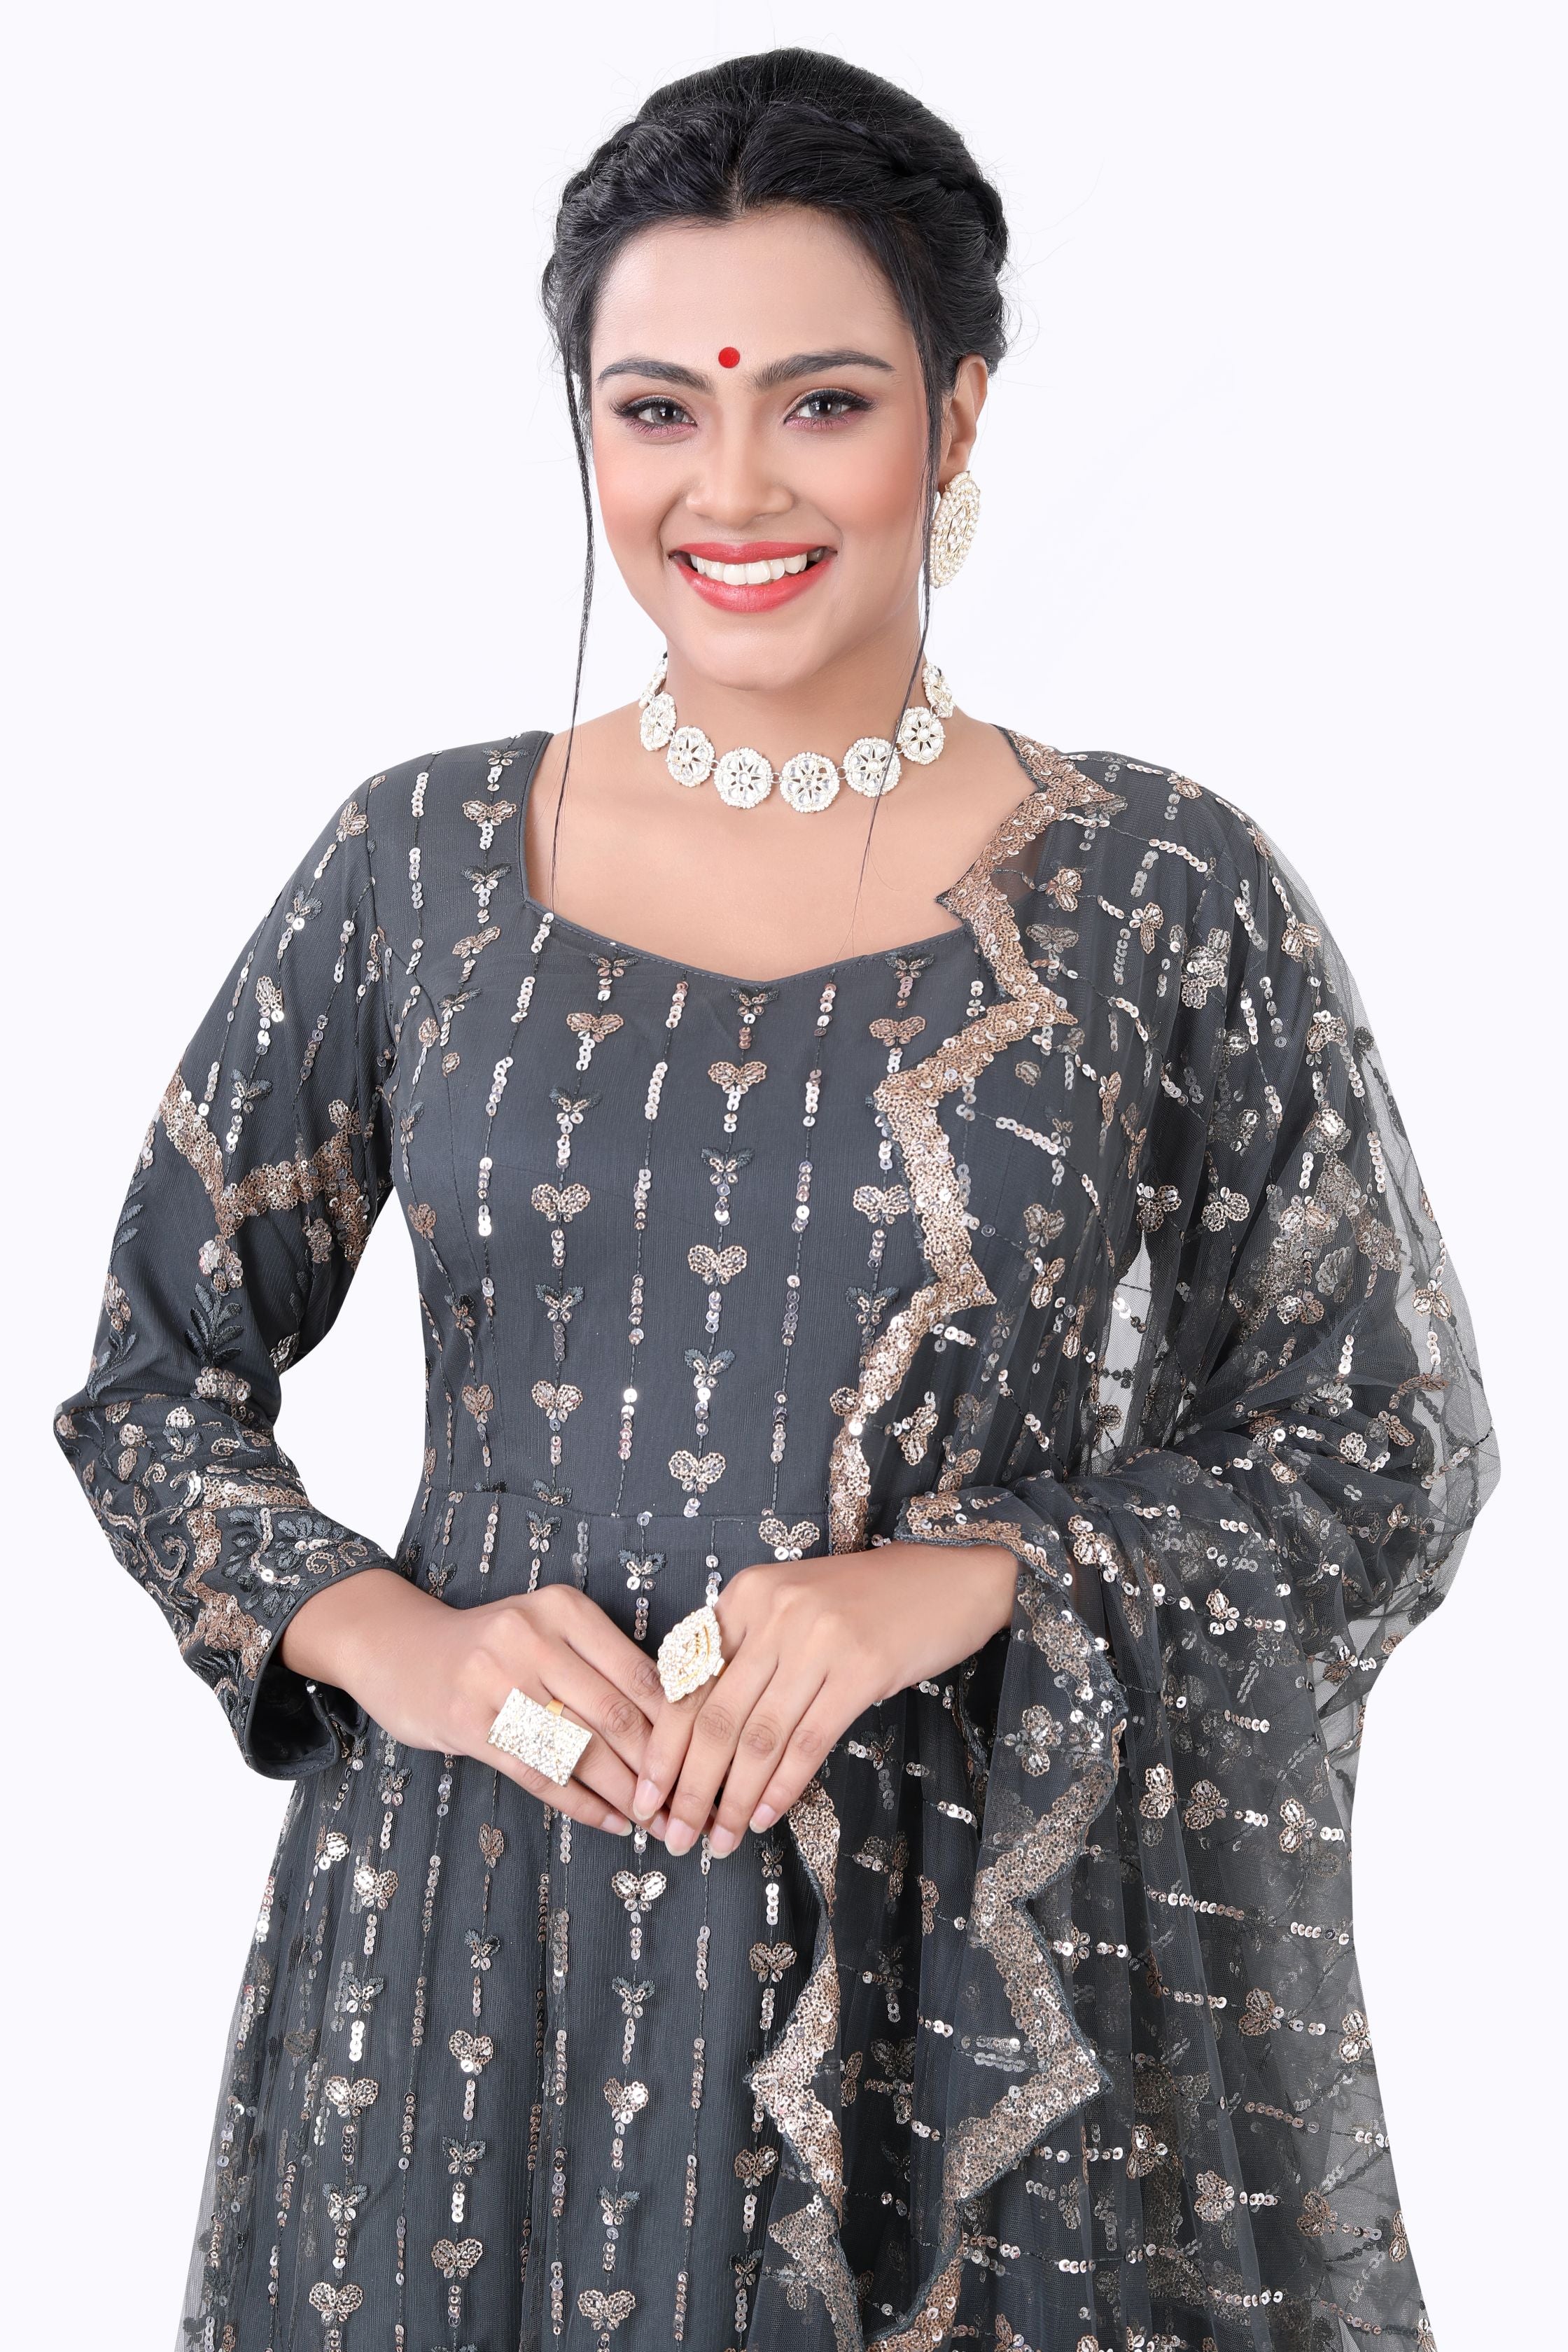 Mehendi Floor Length Anarkali Gown in Net ANS-5007